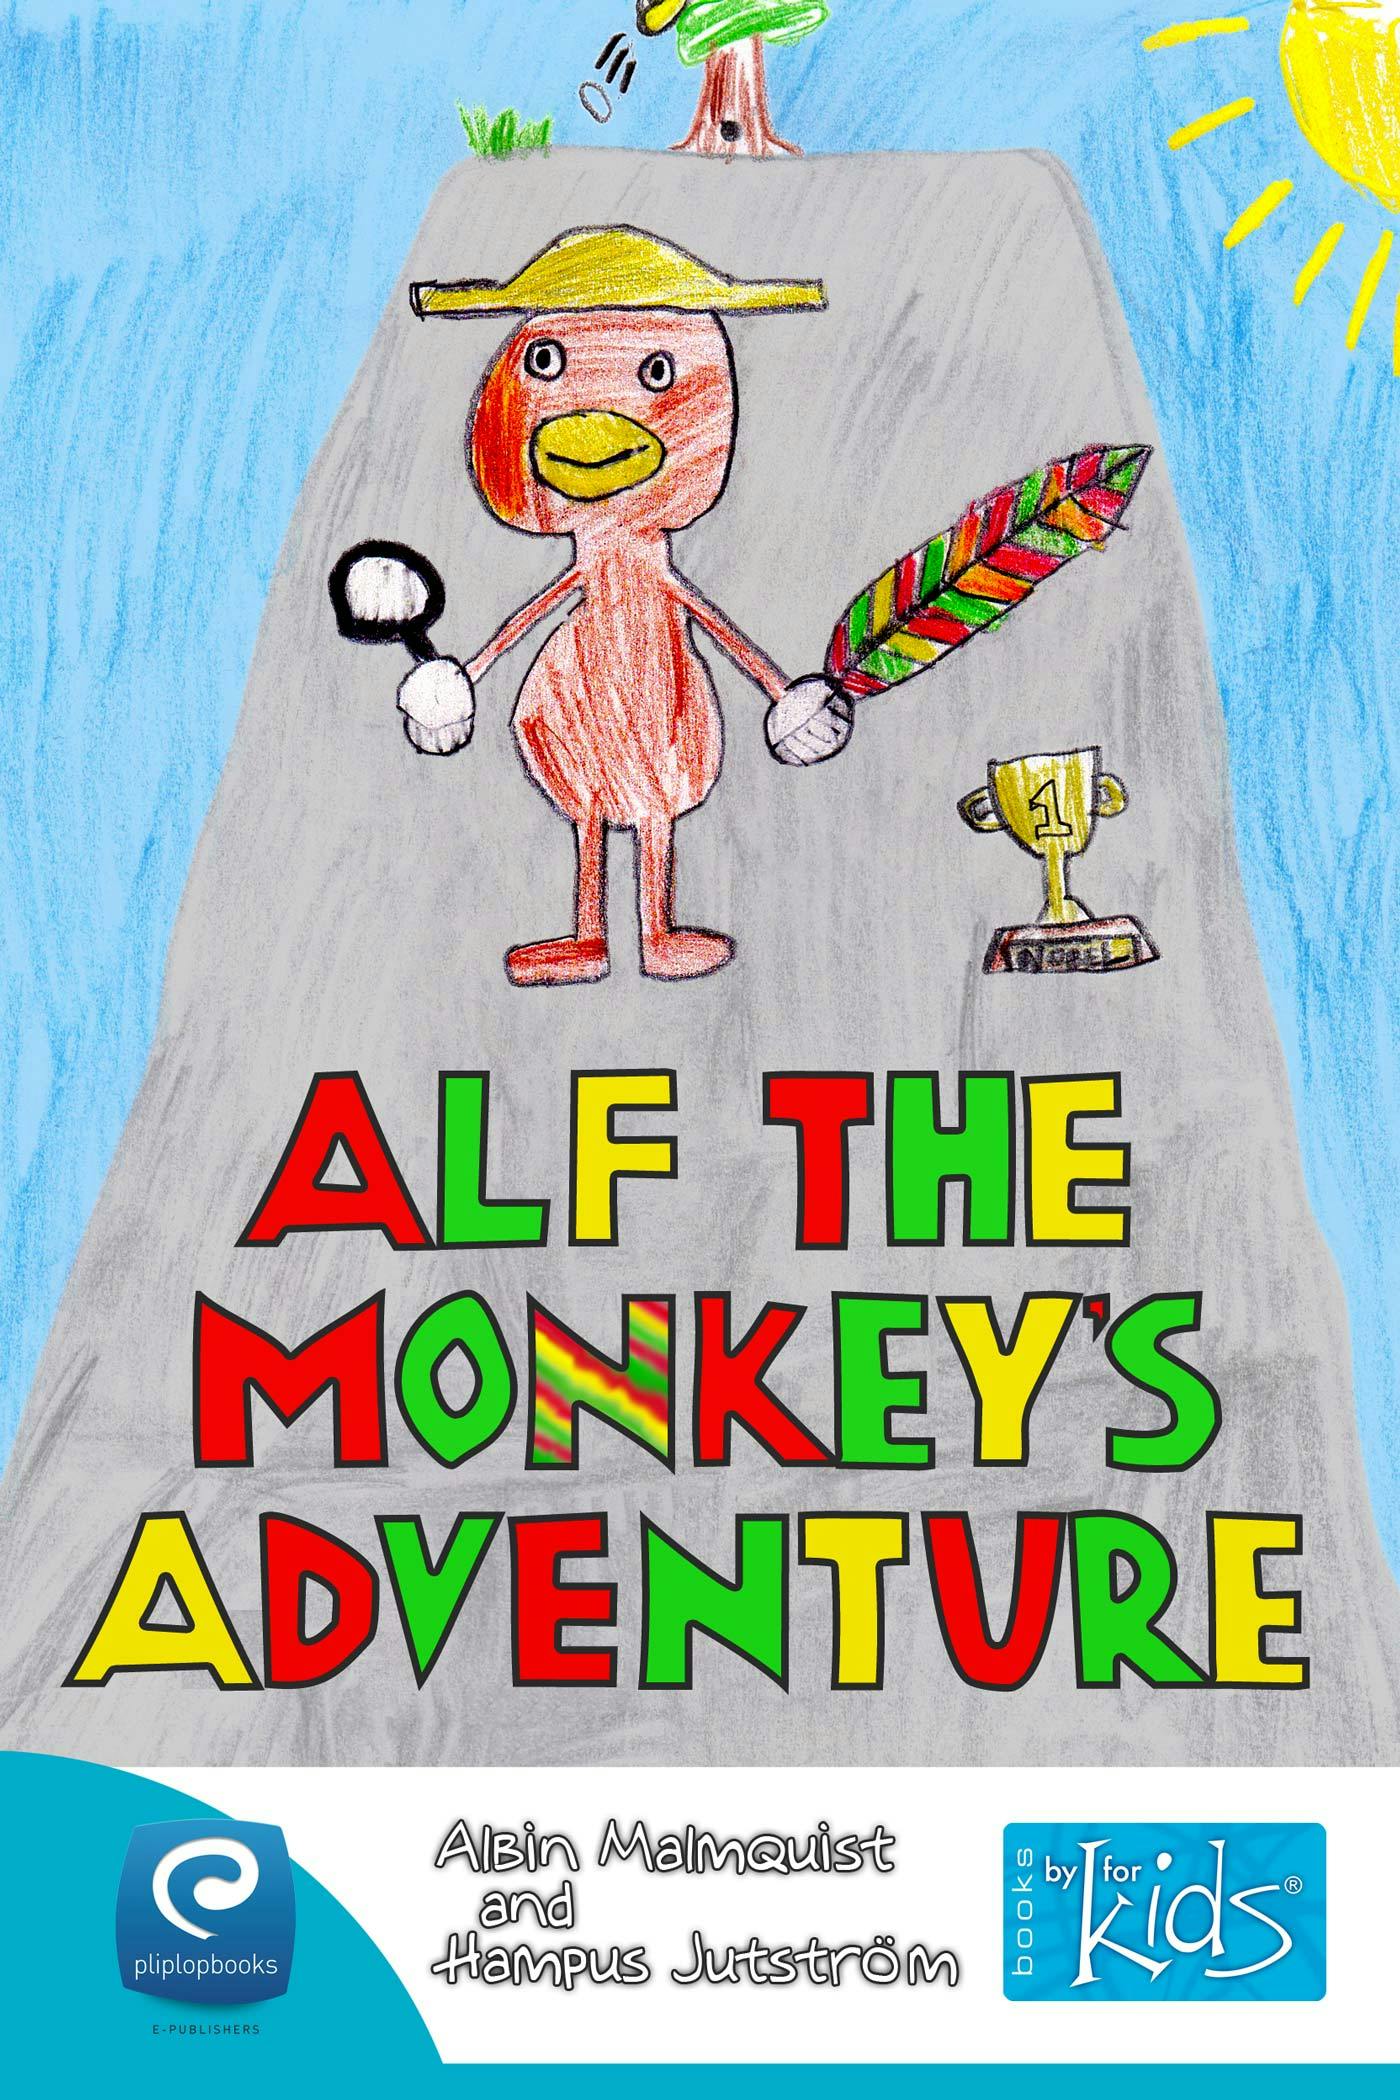 Alf the monkey's adventure - Hampus Jutström, Albin Malmquist